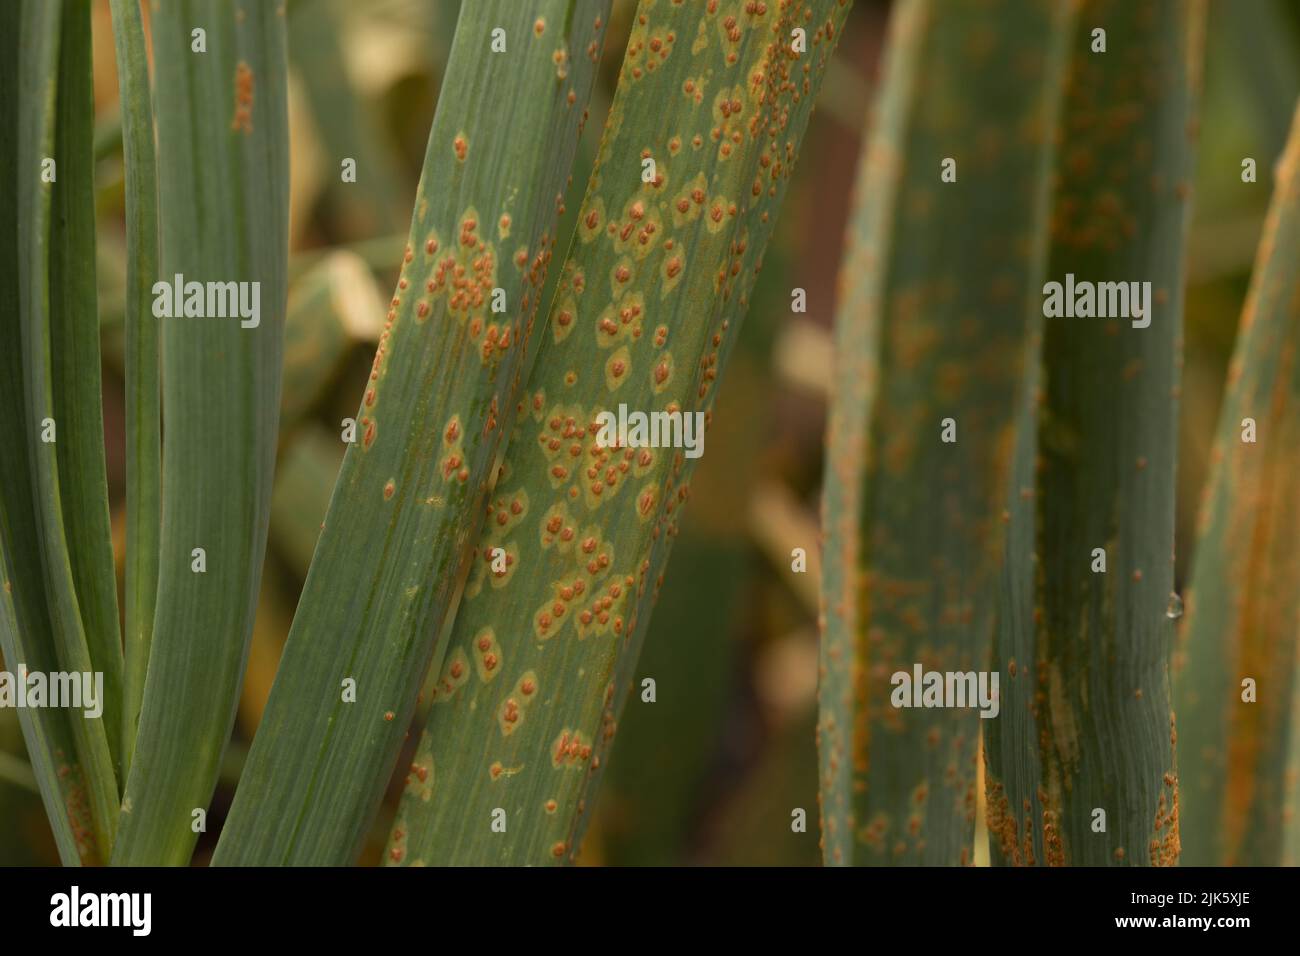 Leaf rust on garlic plant Stock Photo